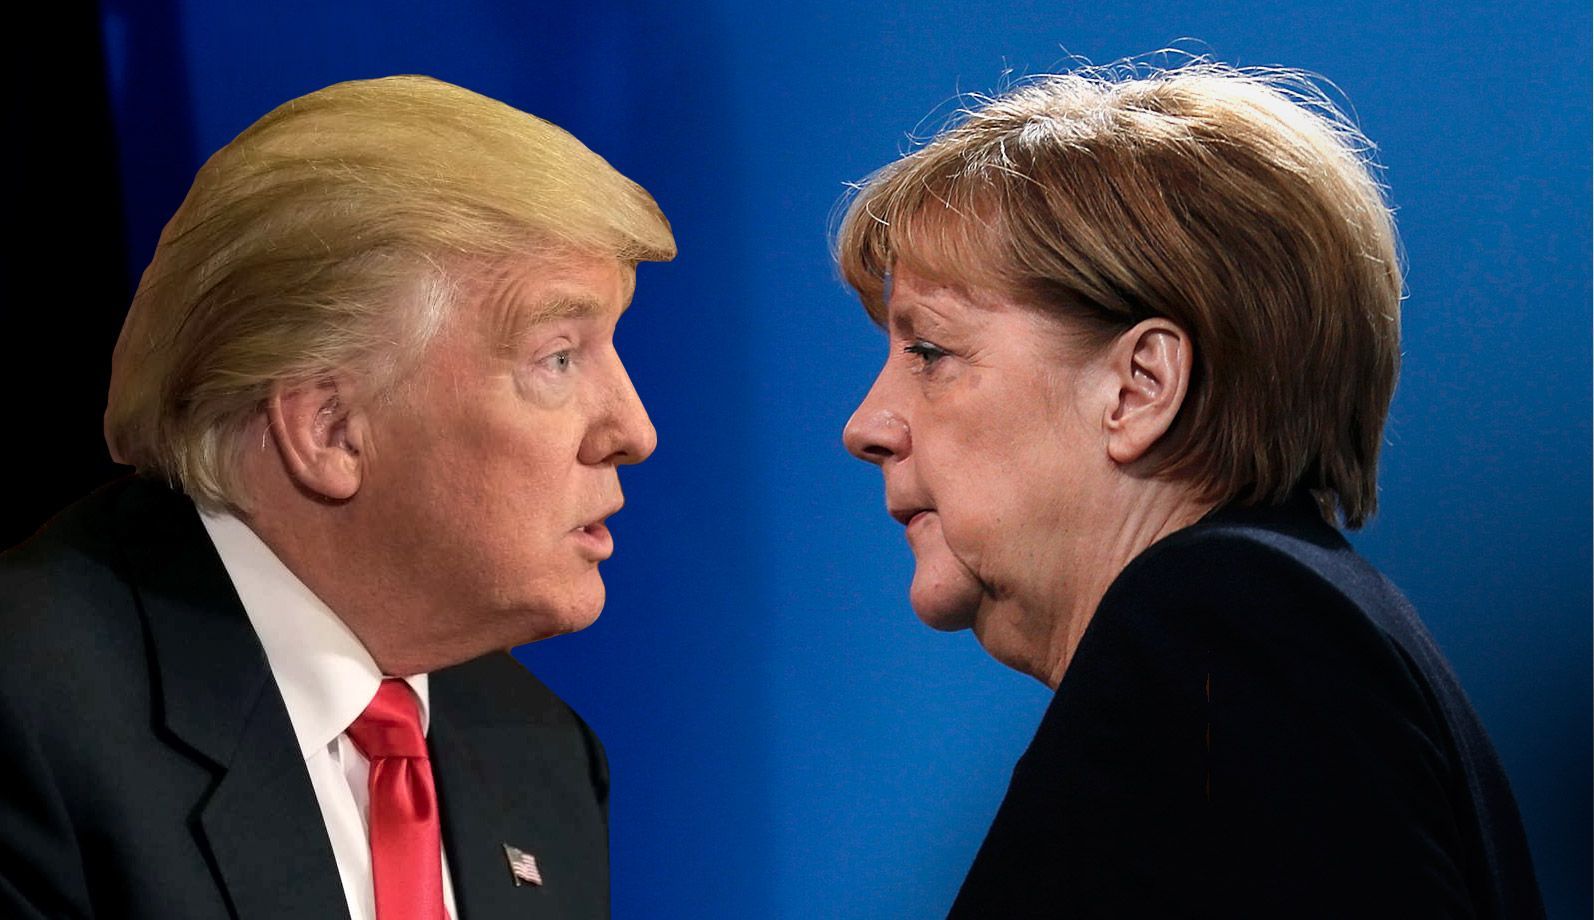 Trump - Merkelová - koláž